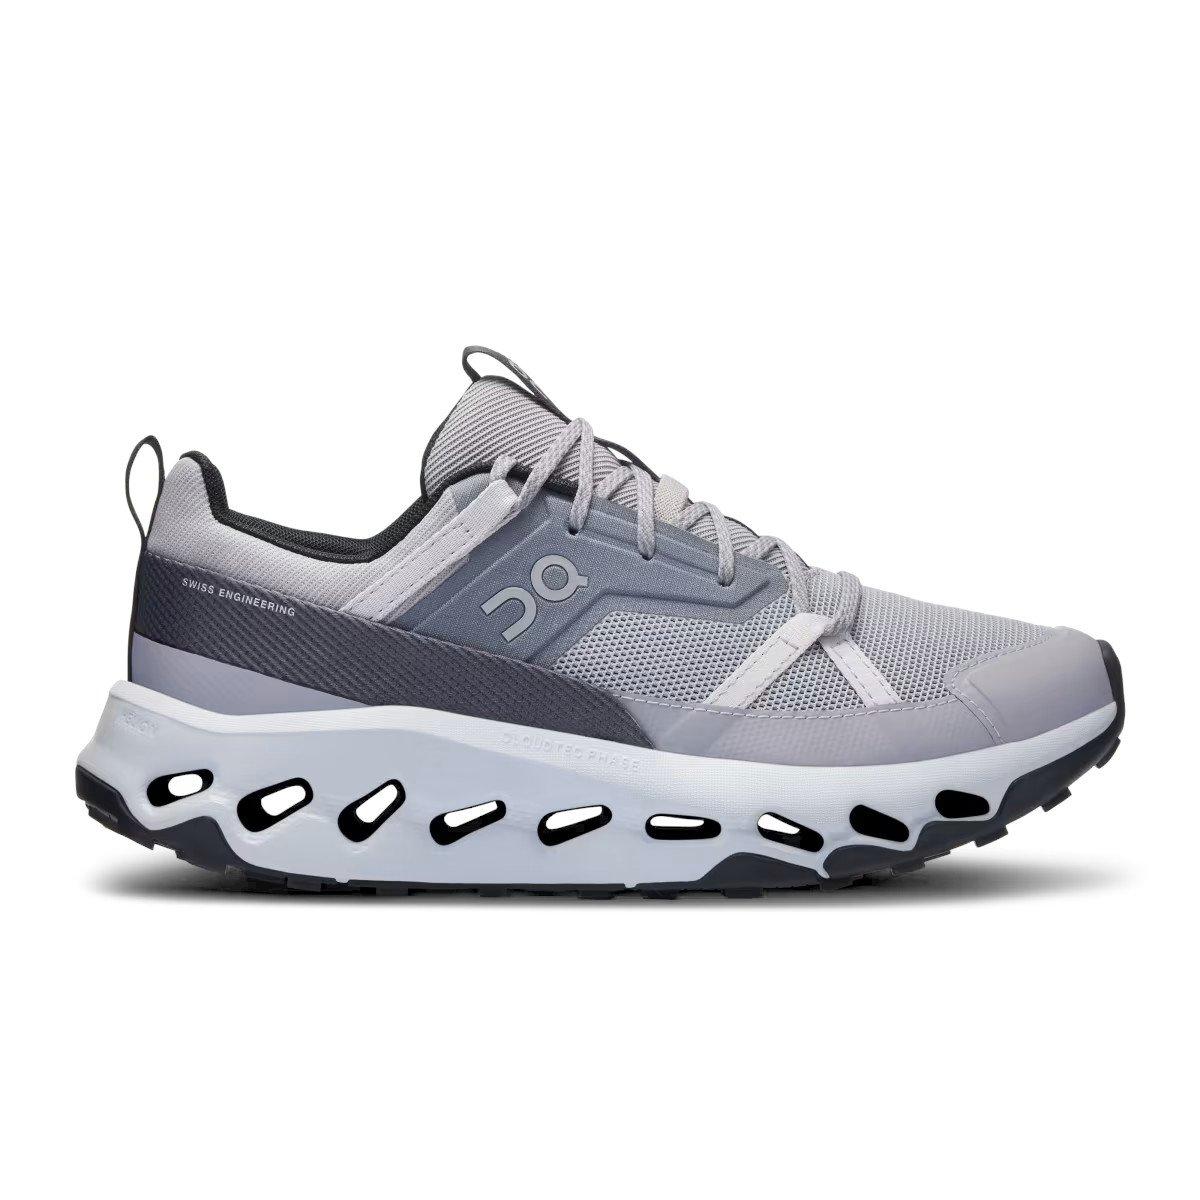 On Women's Cloudhorizon Hiking Shoes - Grey